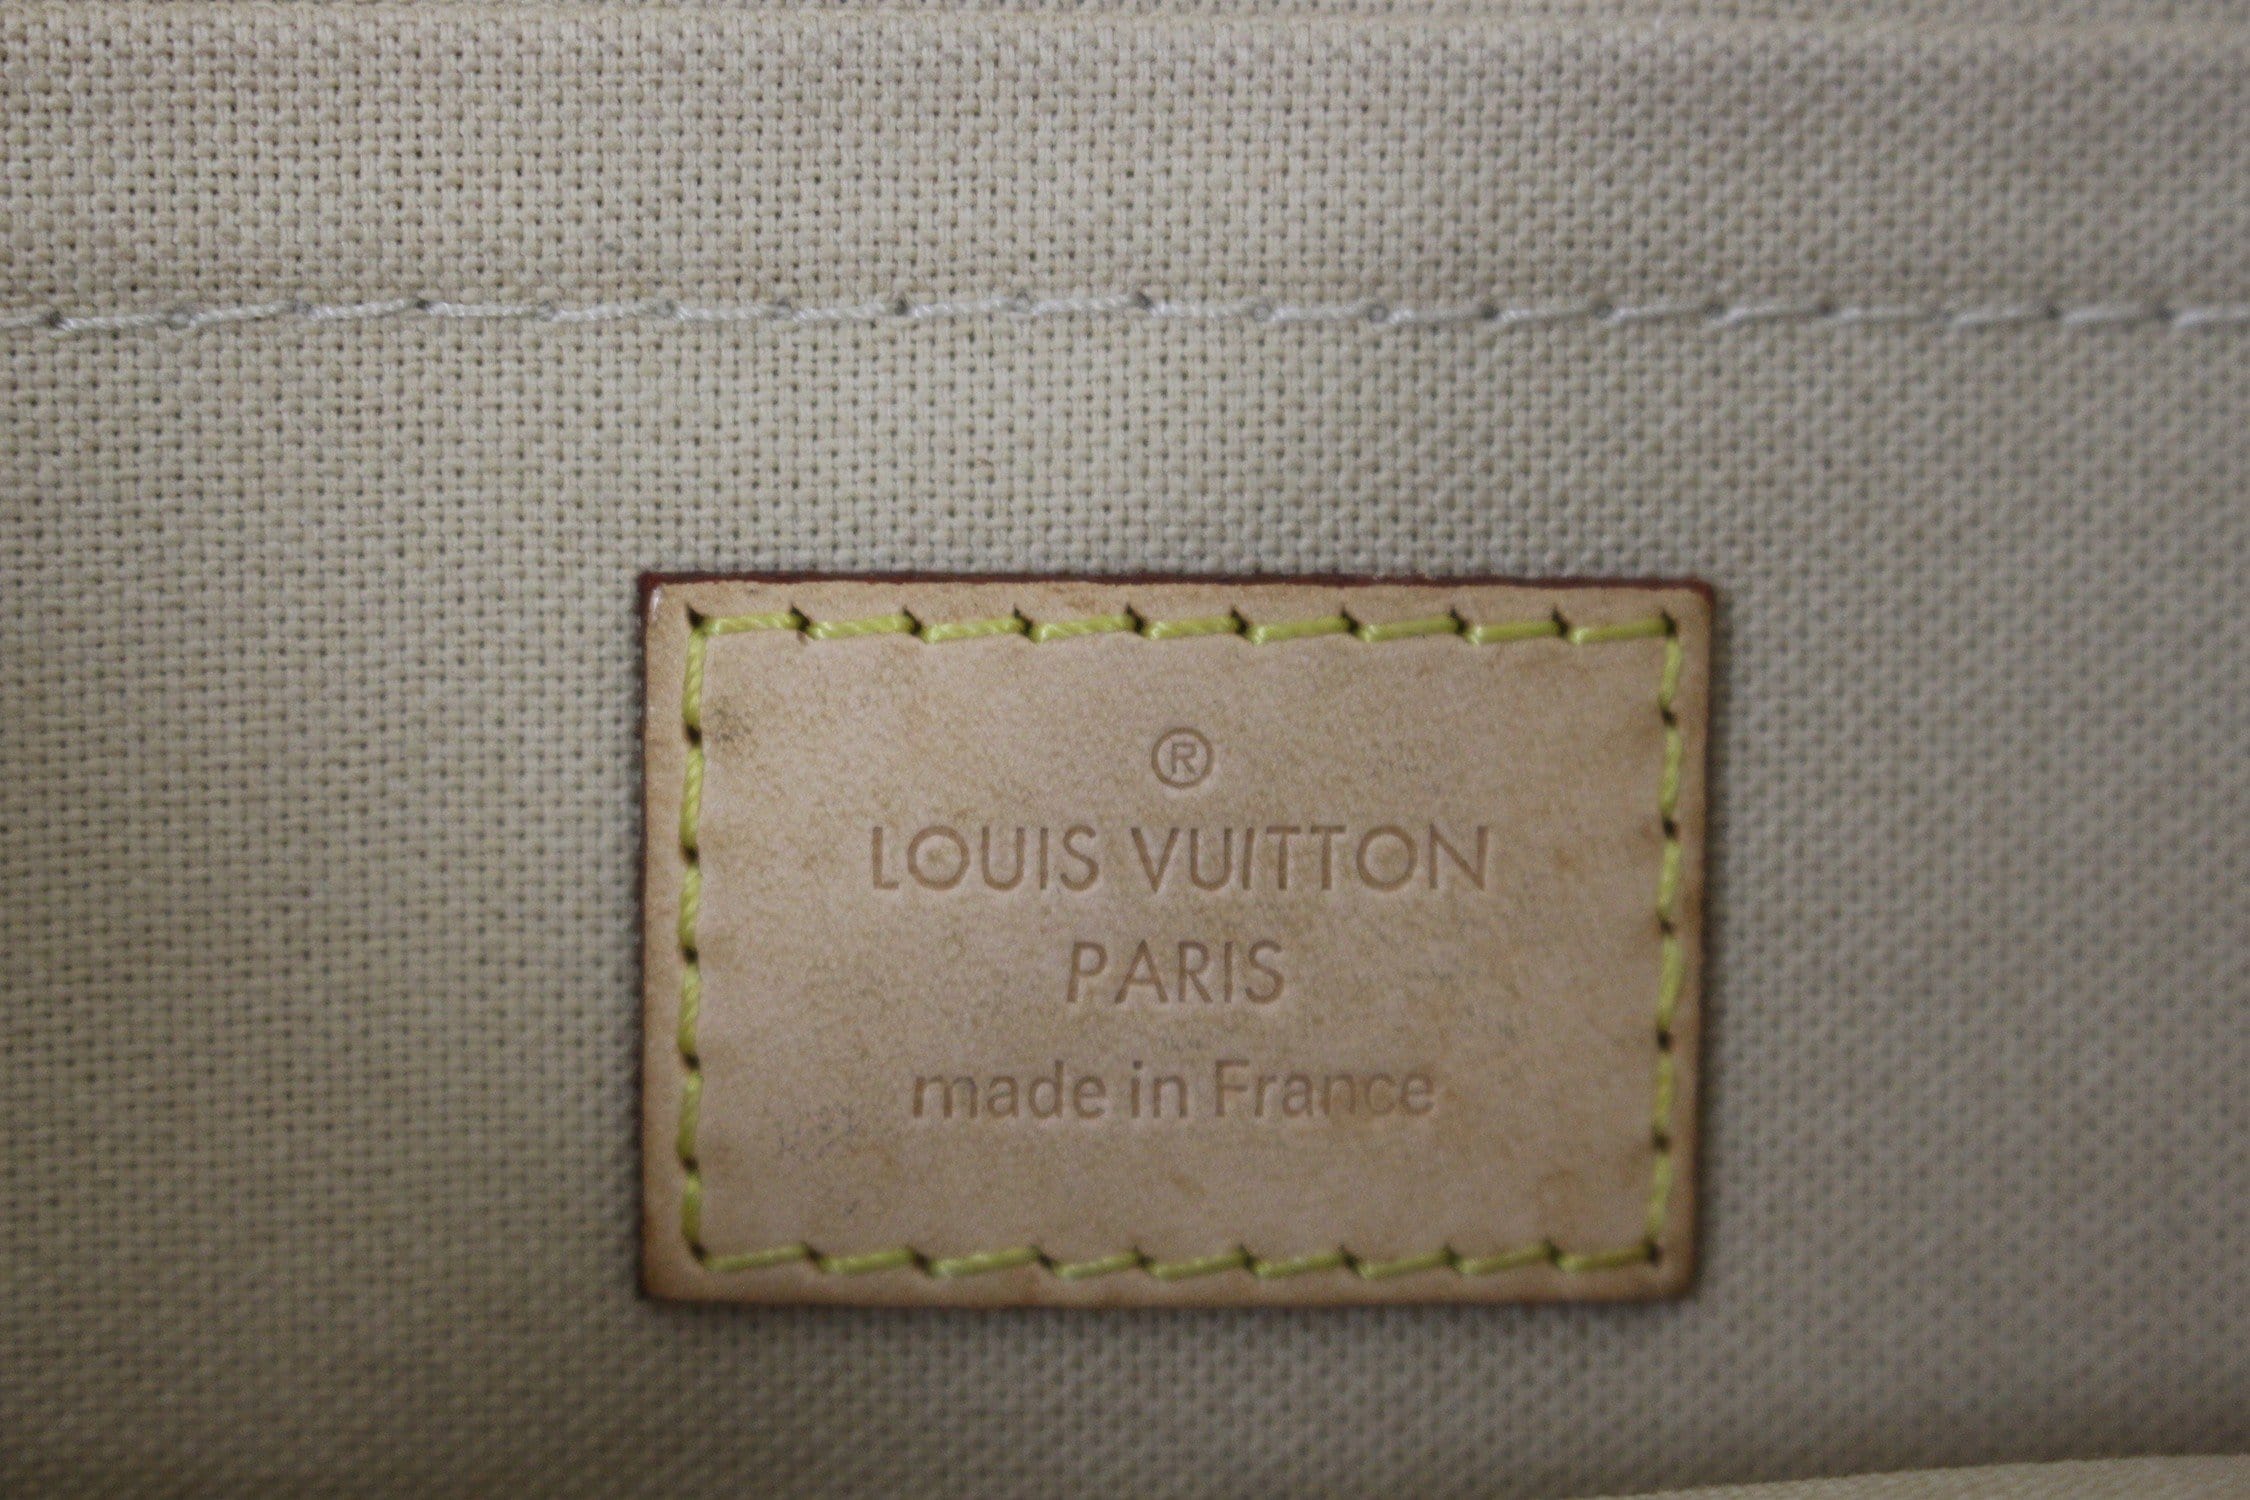 Louis Vuitton Damier Azur Favorite MM at Jill's Consignment